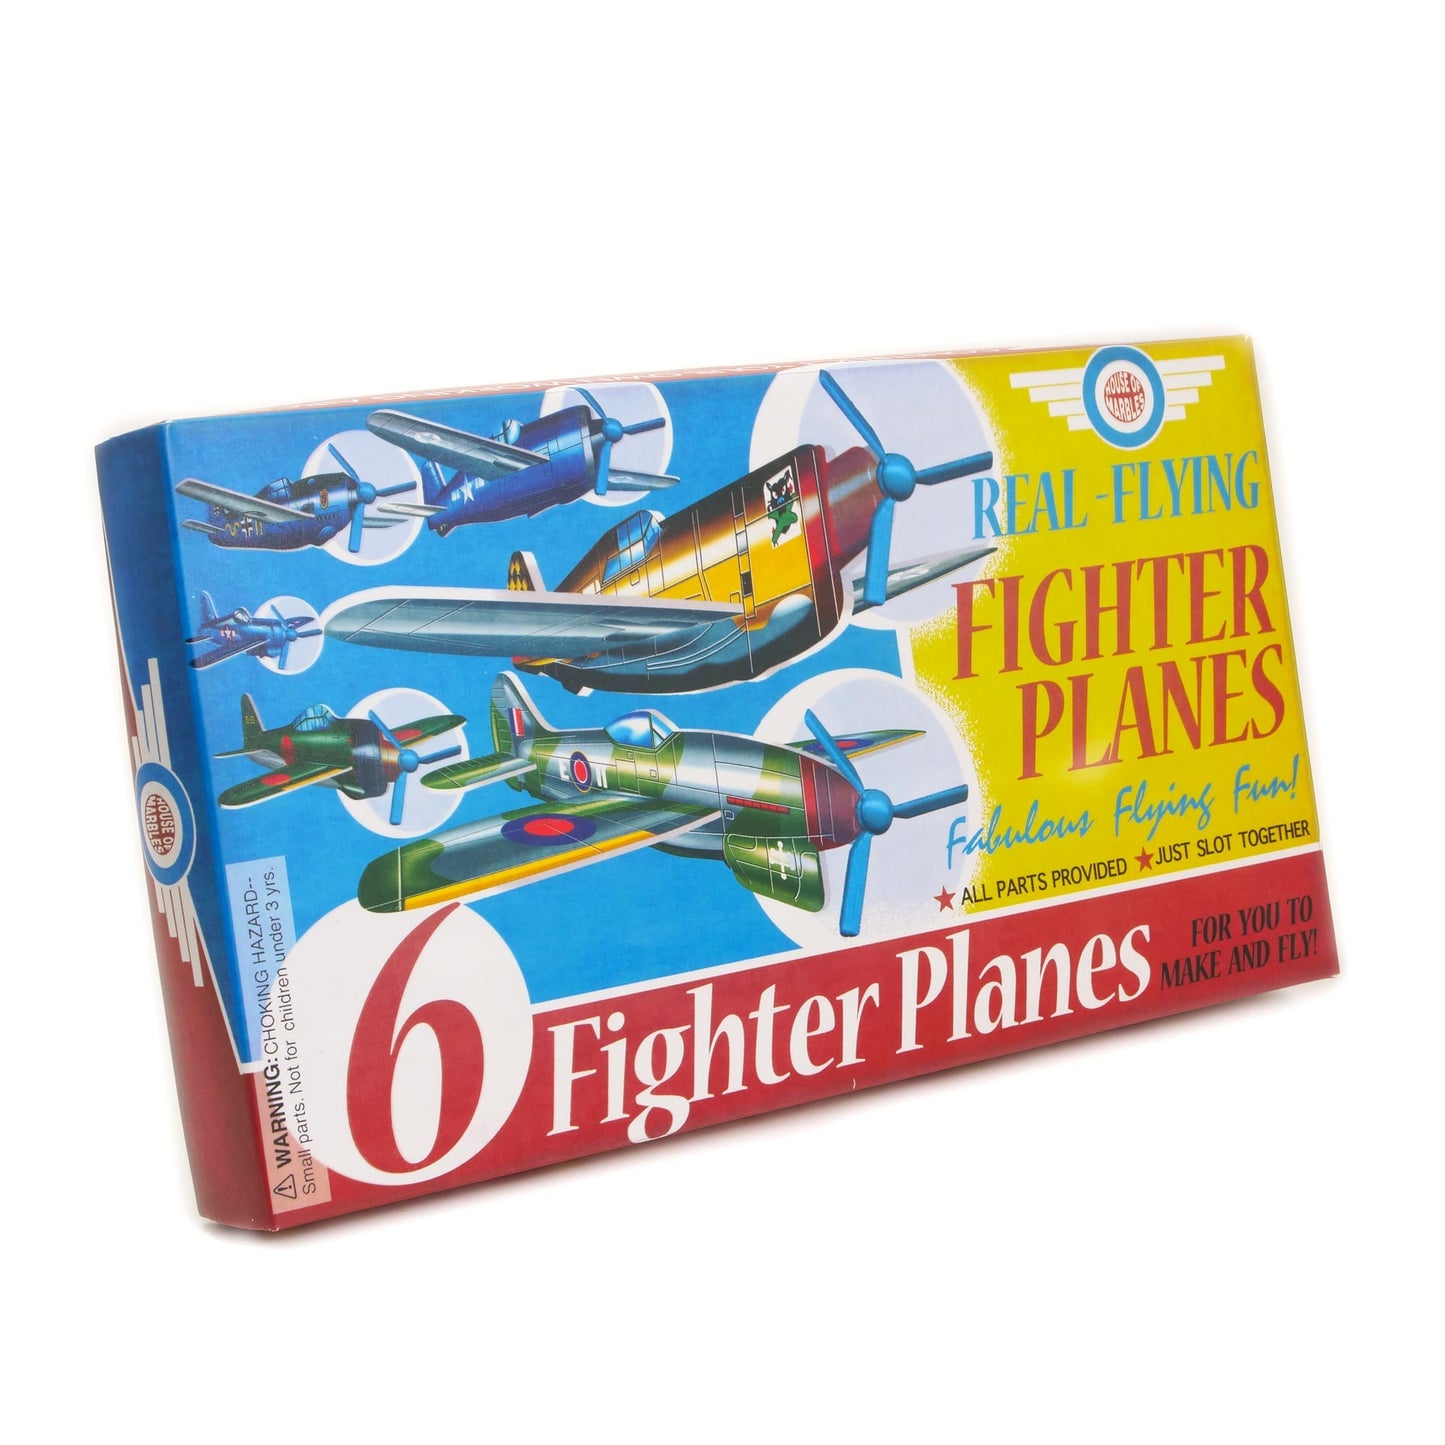 Fighter Planes Kit